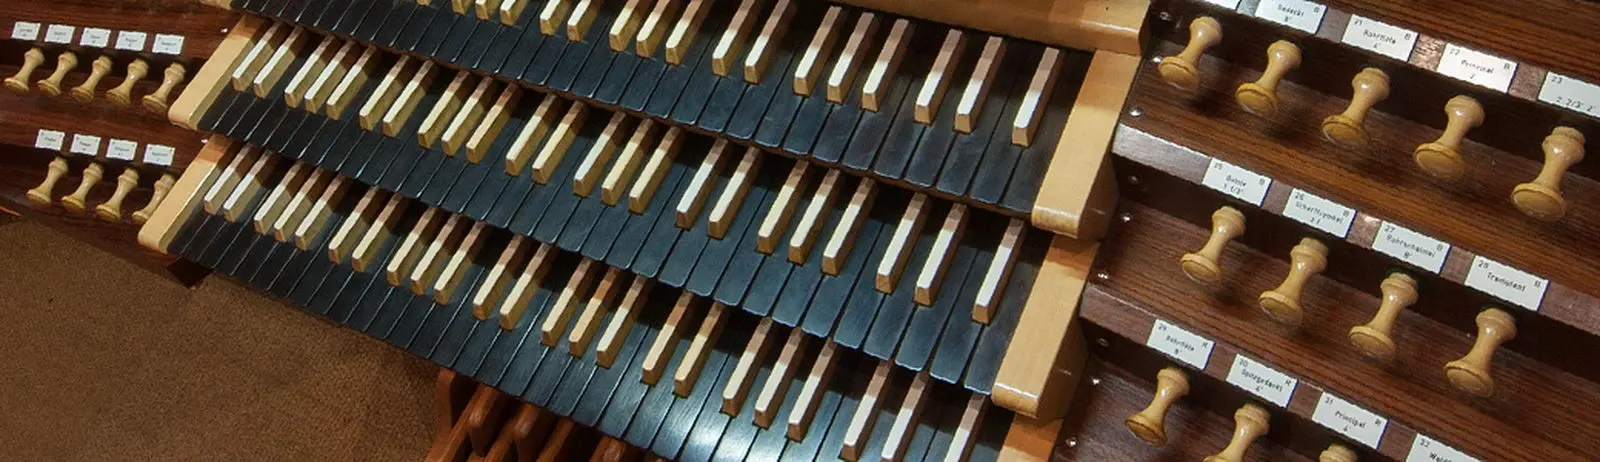 Orgeltastatur (Foto: Klaus Böse)